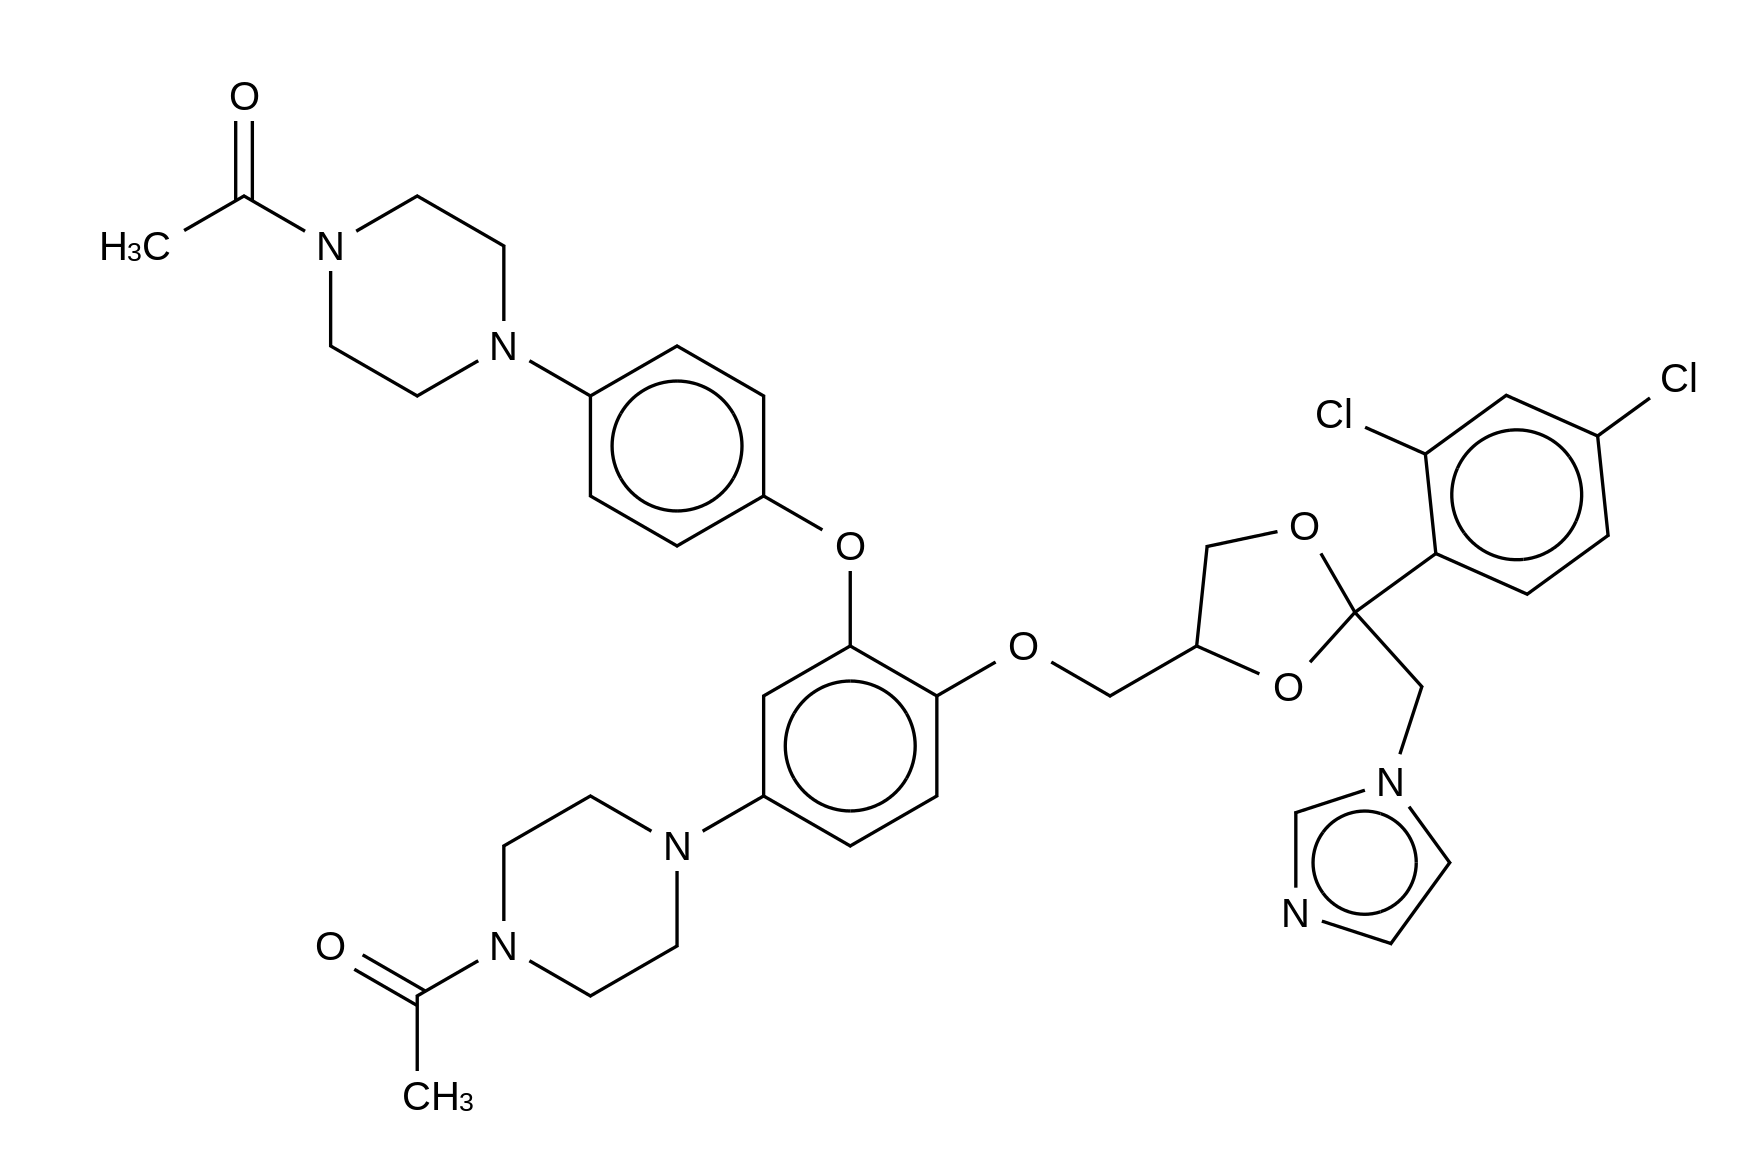 N-Acetylpiperazine-N’-(4-phenol) Ketoconazole